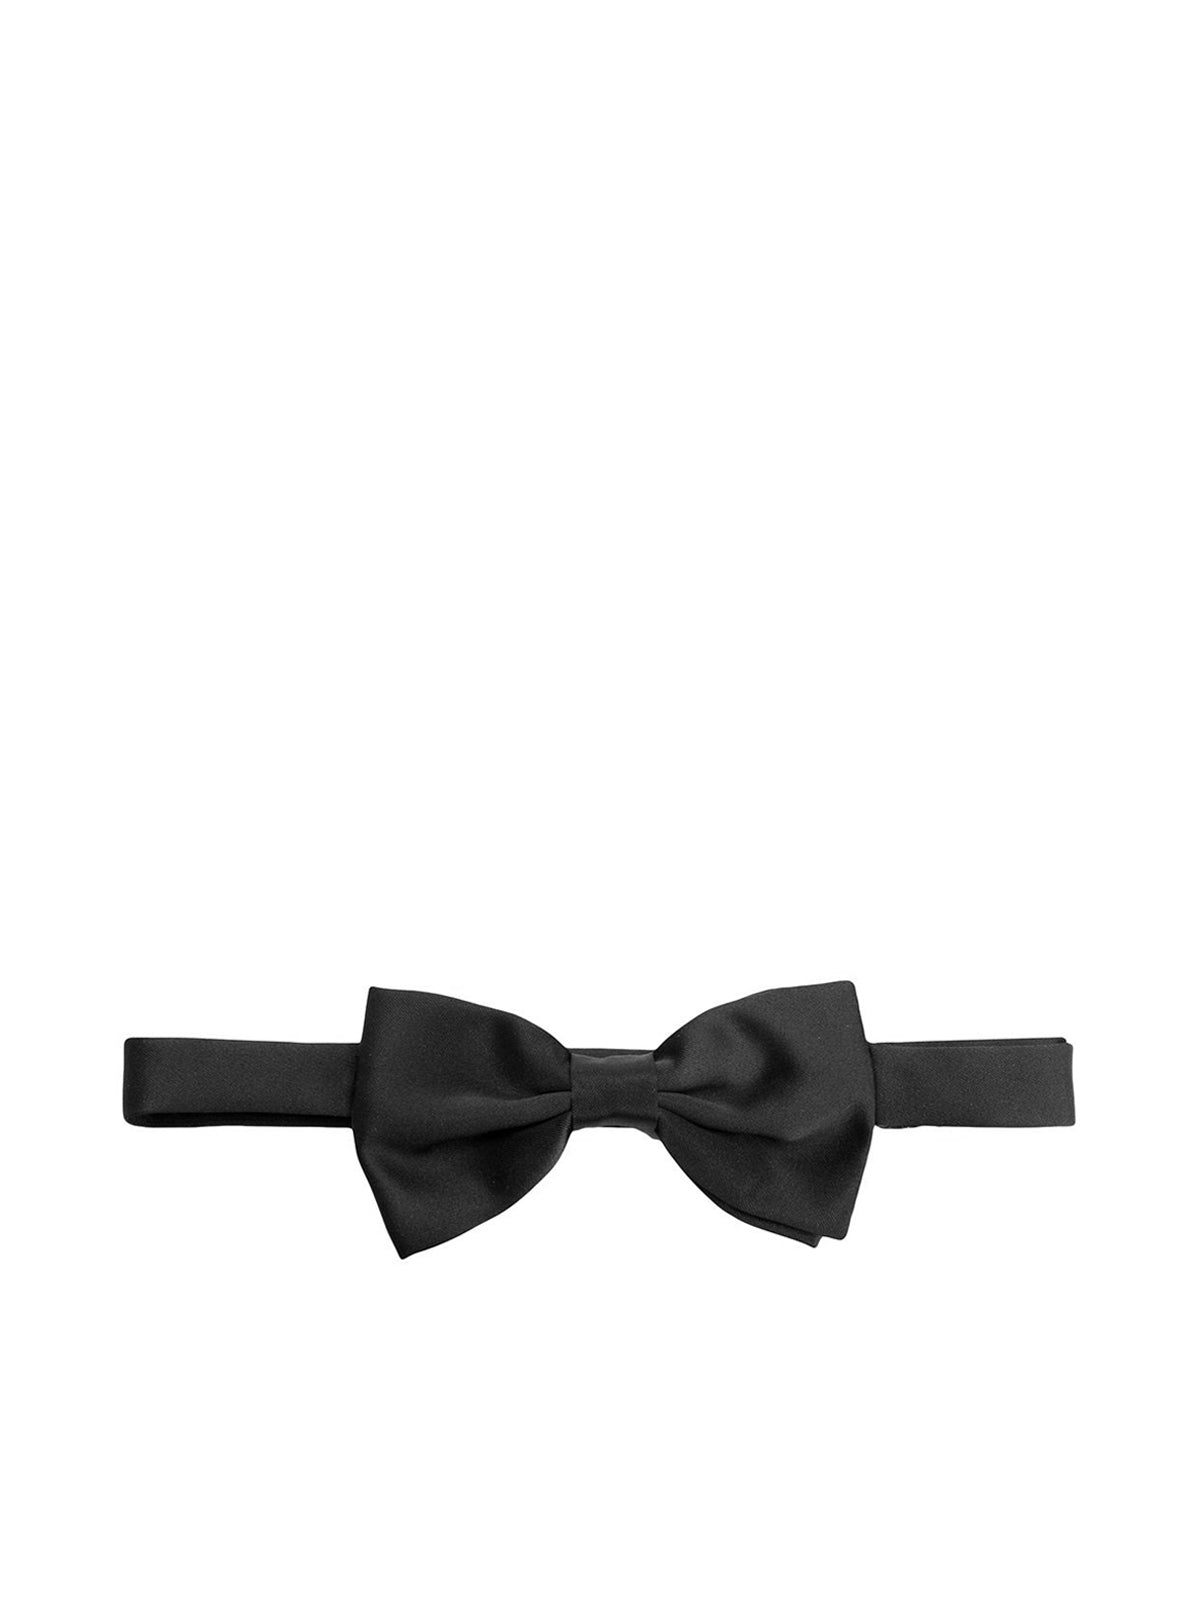 Classic black bow tie